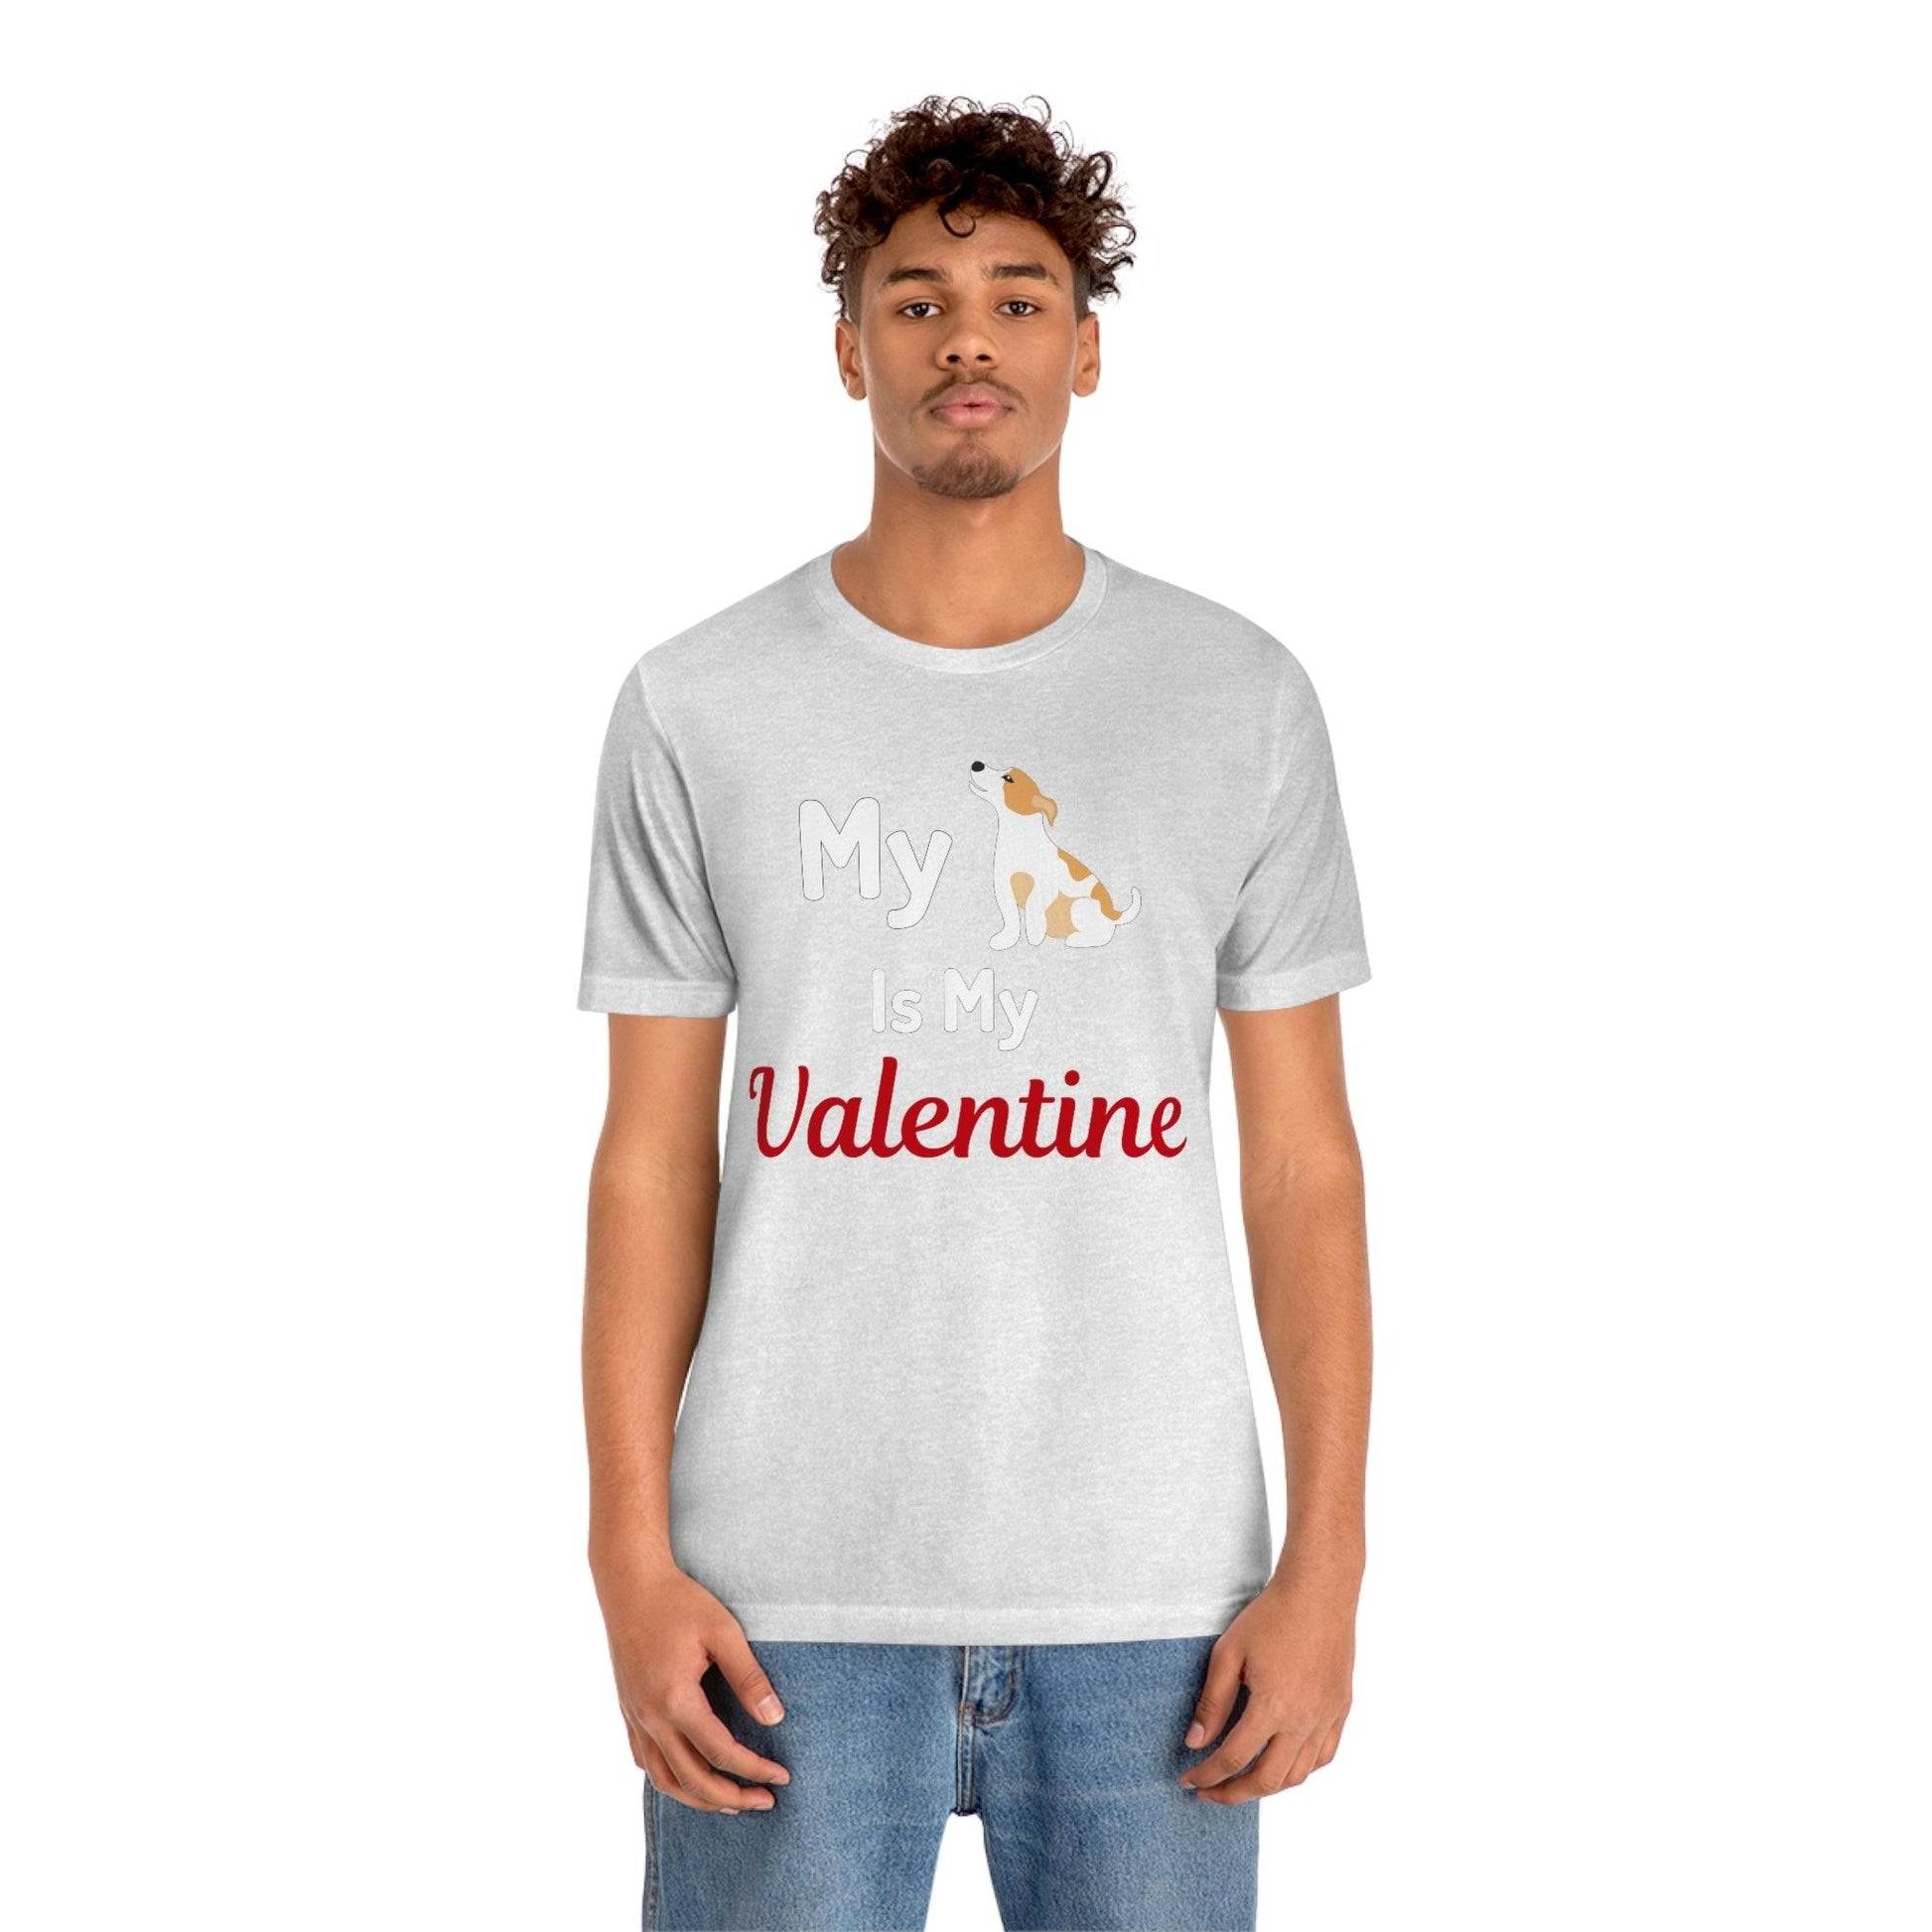 My Dog is my Valentine shirt - Pet lover shirt - dog lover shirt - Giftsmojo